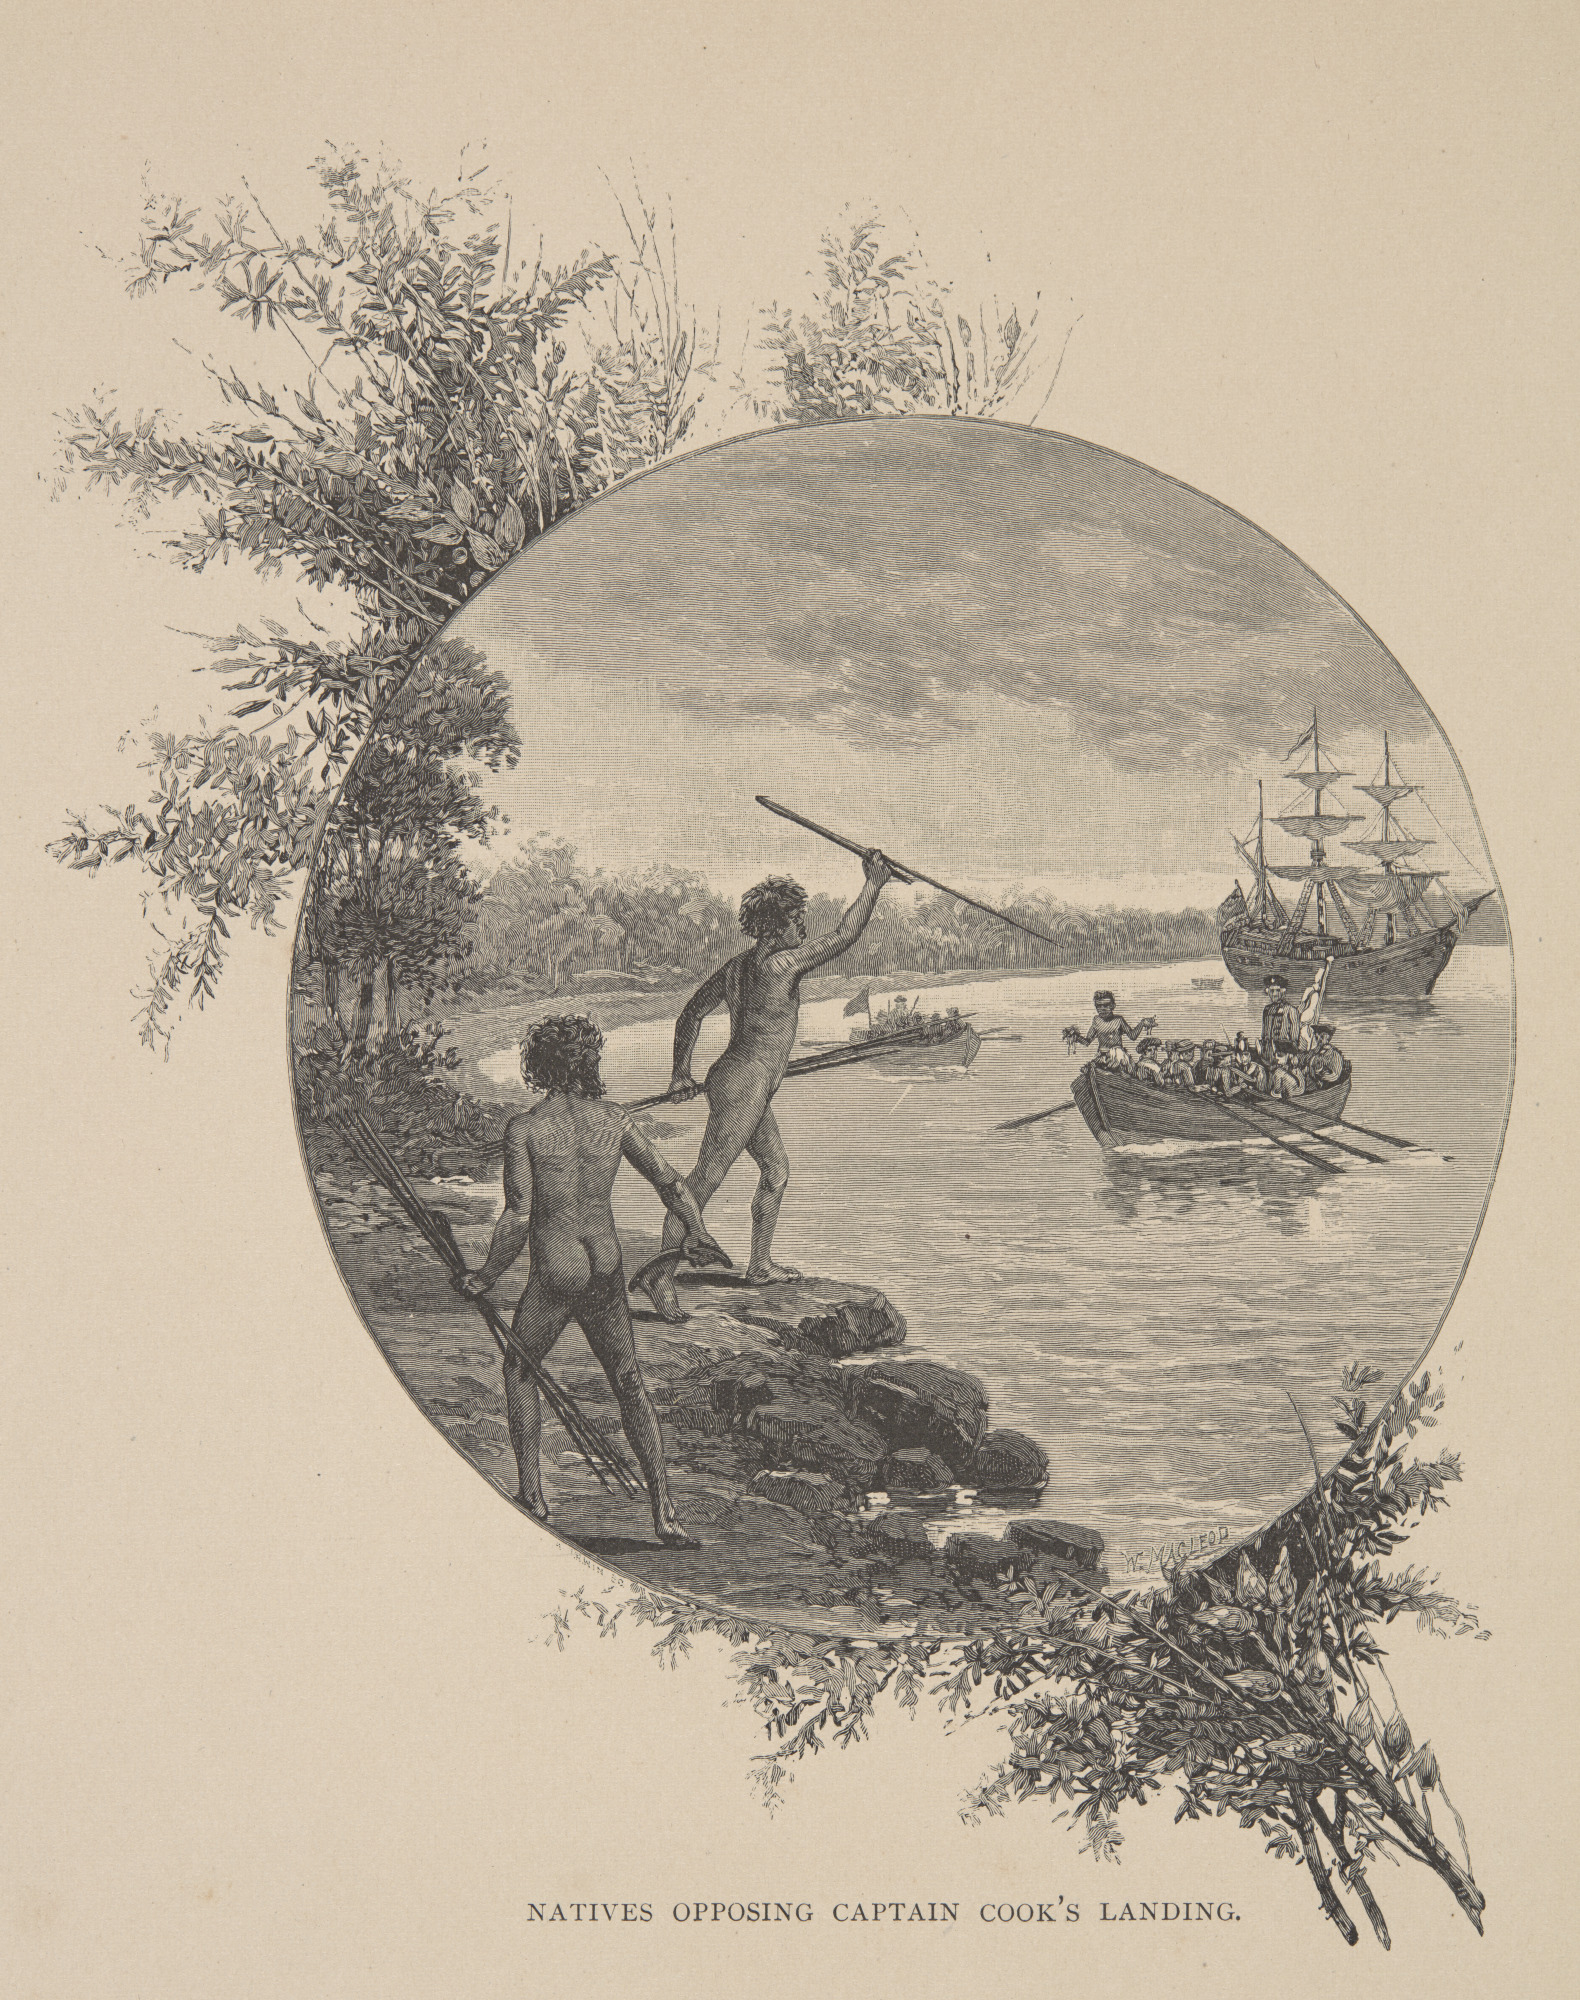 ‘Natives Opposing Captain Cook’s Landing’, in Picturesque Atlas of Australasia, 1886.